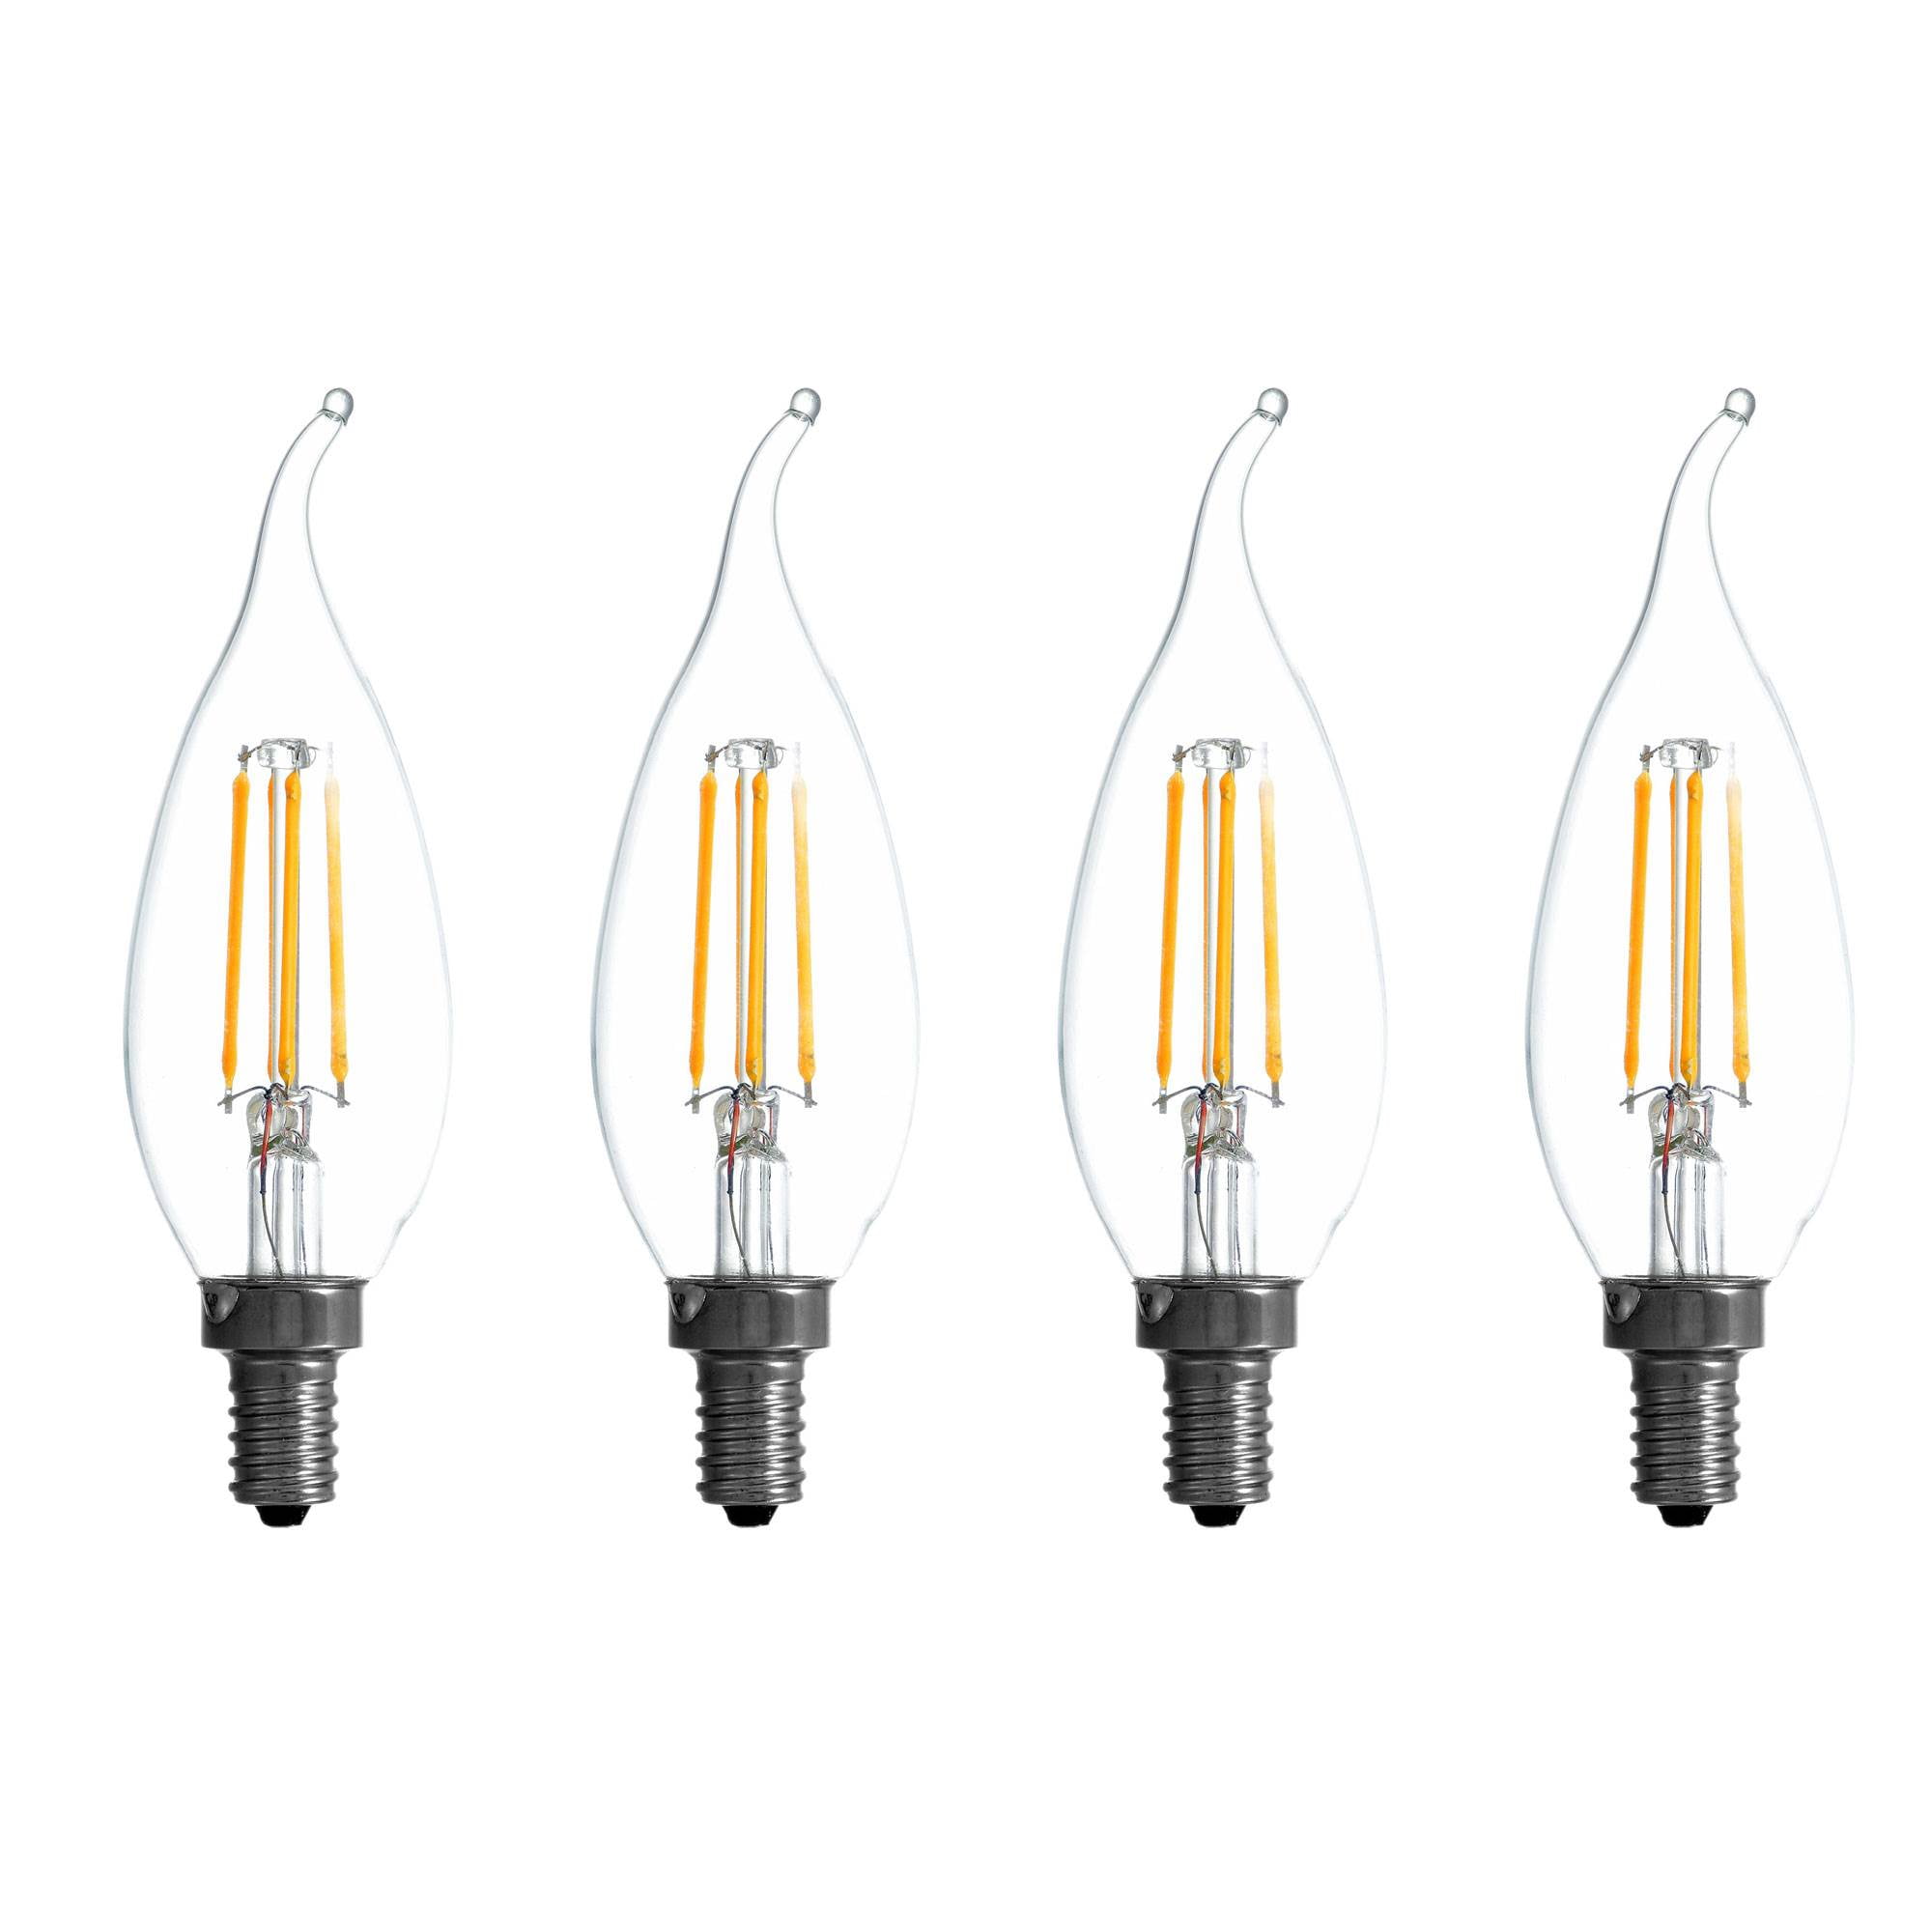 Sylvania Filament LED 60W Candelabra Base Dimmable Daylight Light Bulb (4 Pack)